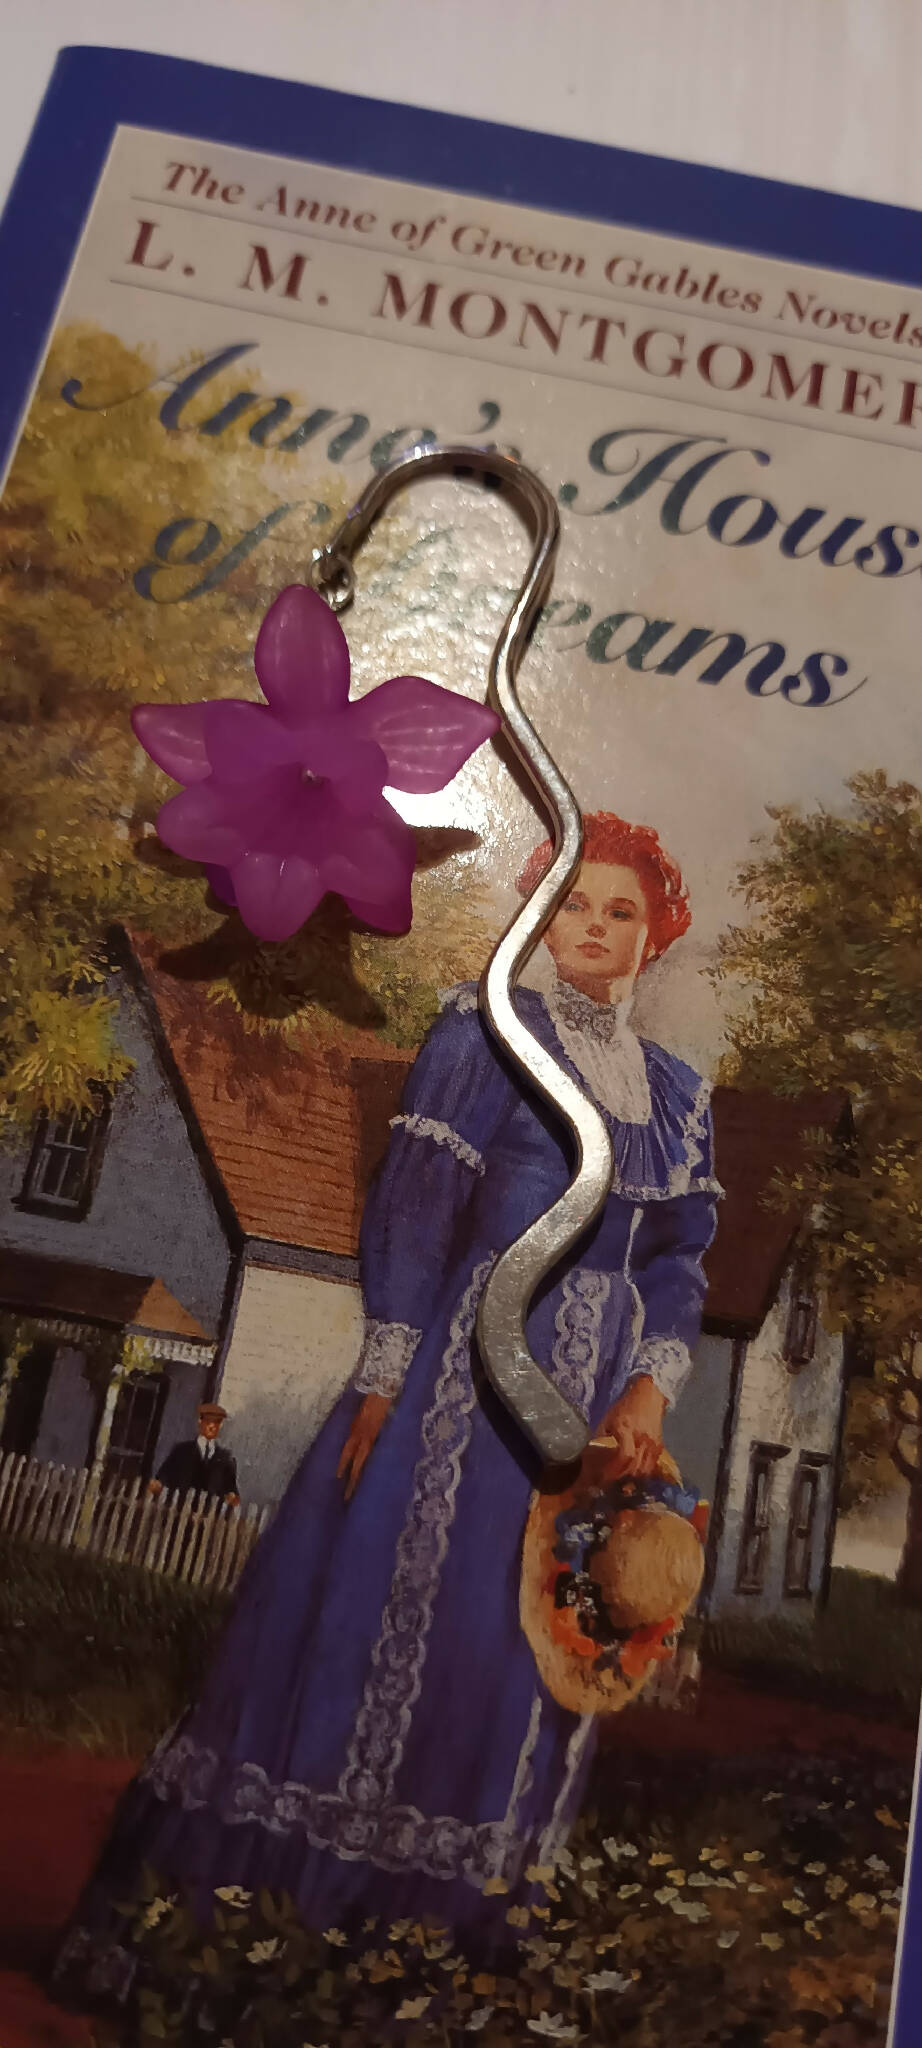 Purple flower bookmark